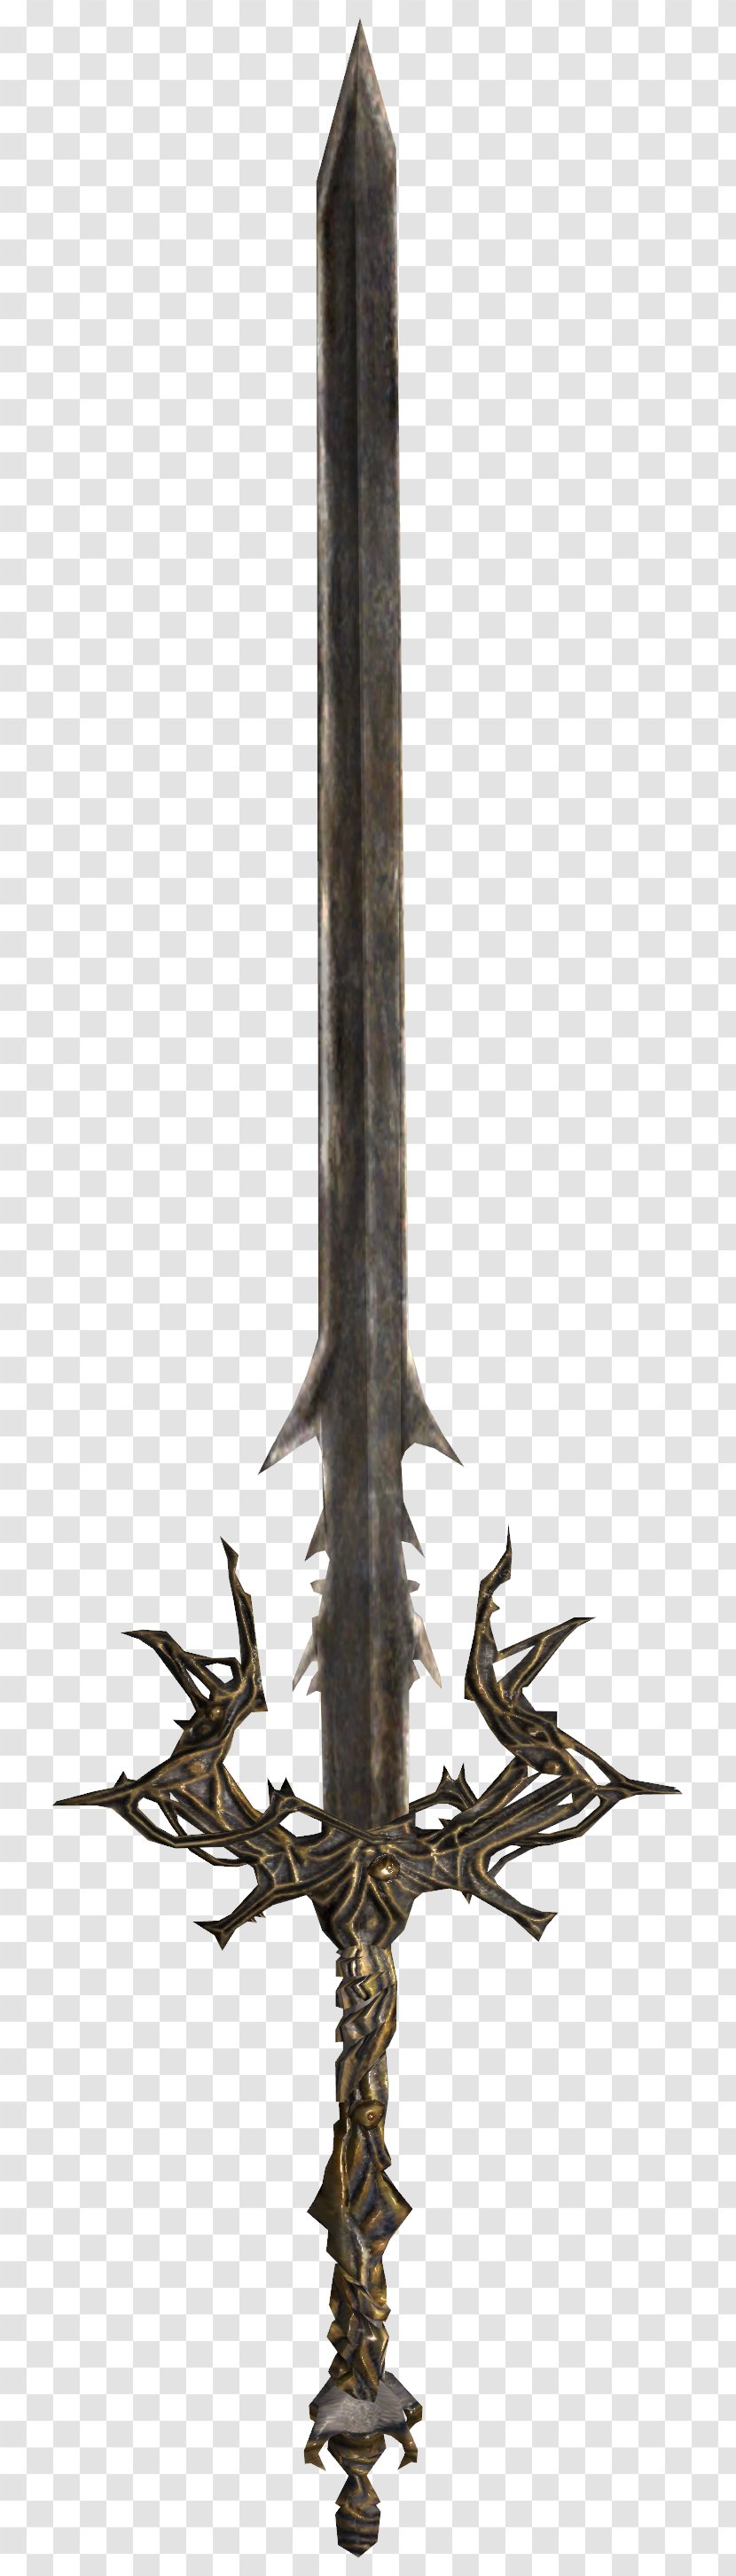 Claymore Shivering Isles Weapon Sword The Elder Scrolls V: Skyrim Transparent PNG